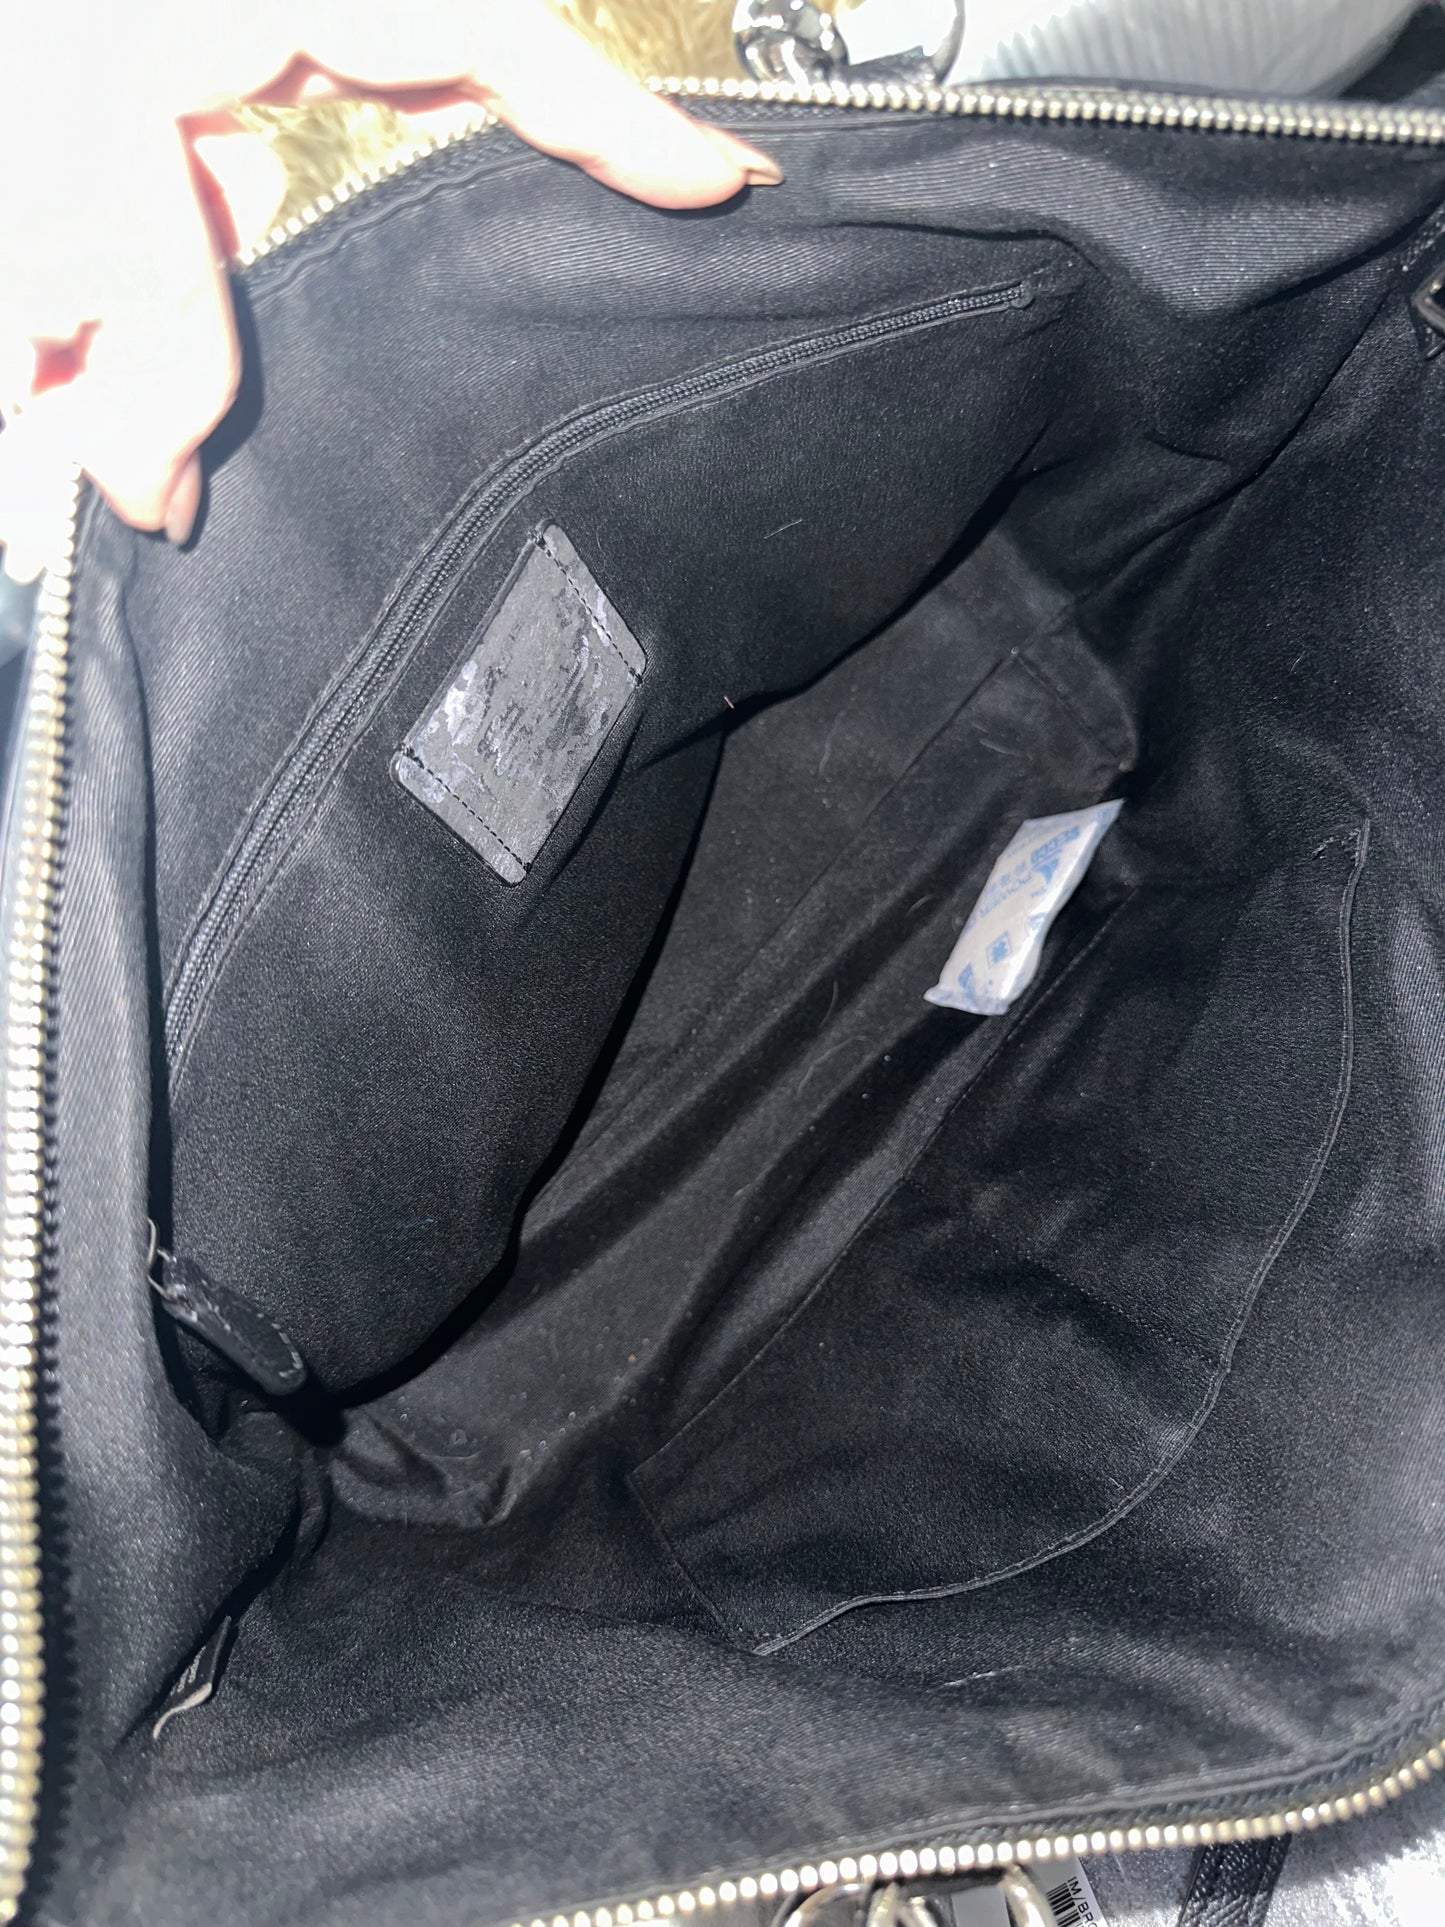 AUTHENTIC/ORIGINAL Preloved Coach Ava Tote In Crossgrain Leather Shoulder Black Bag